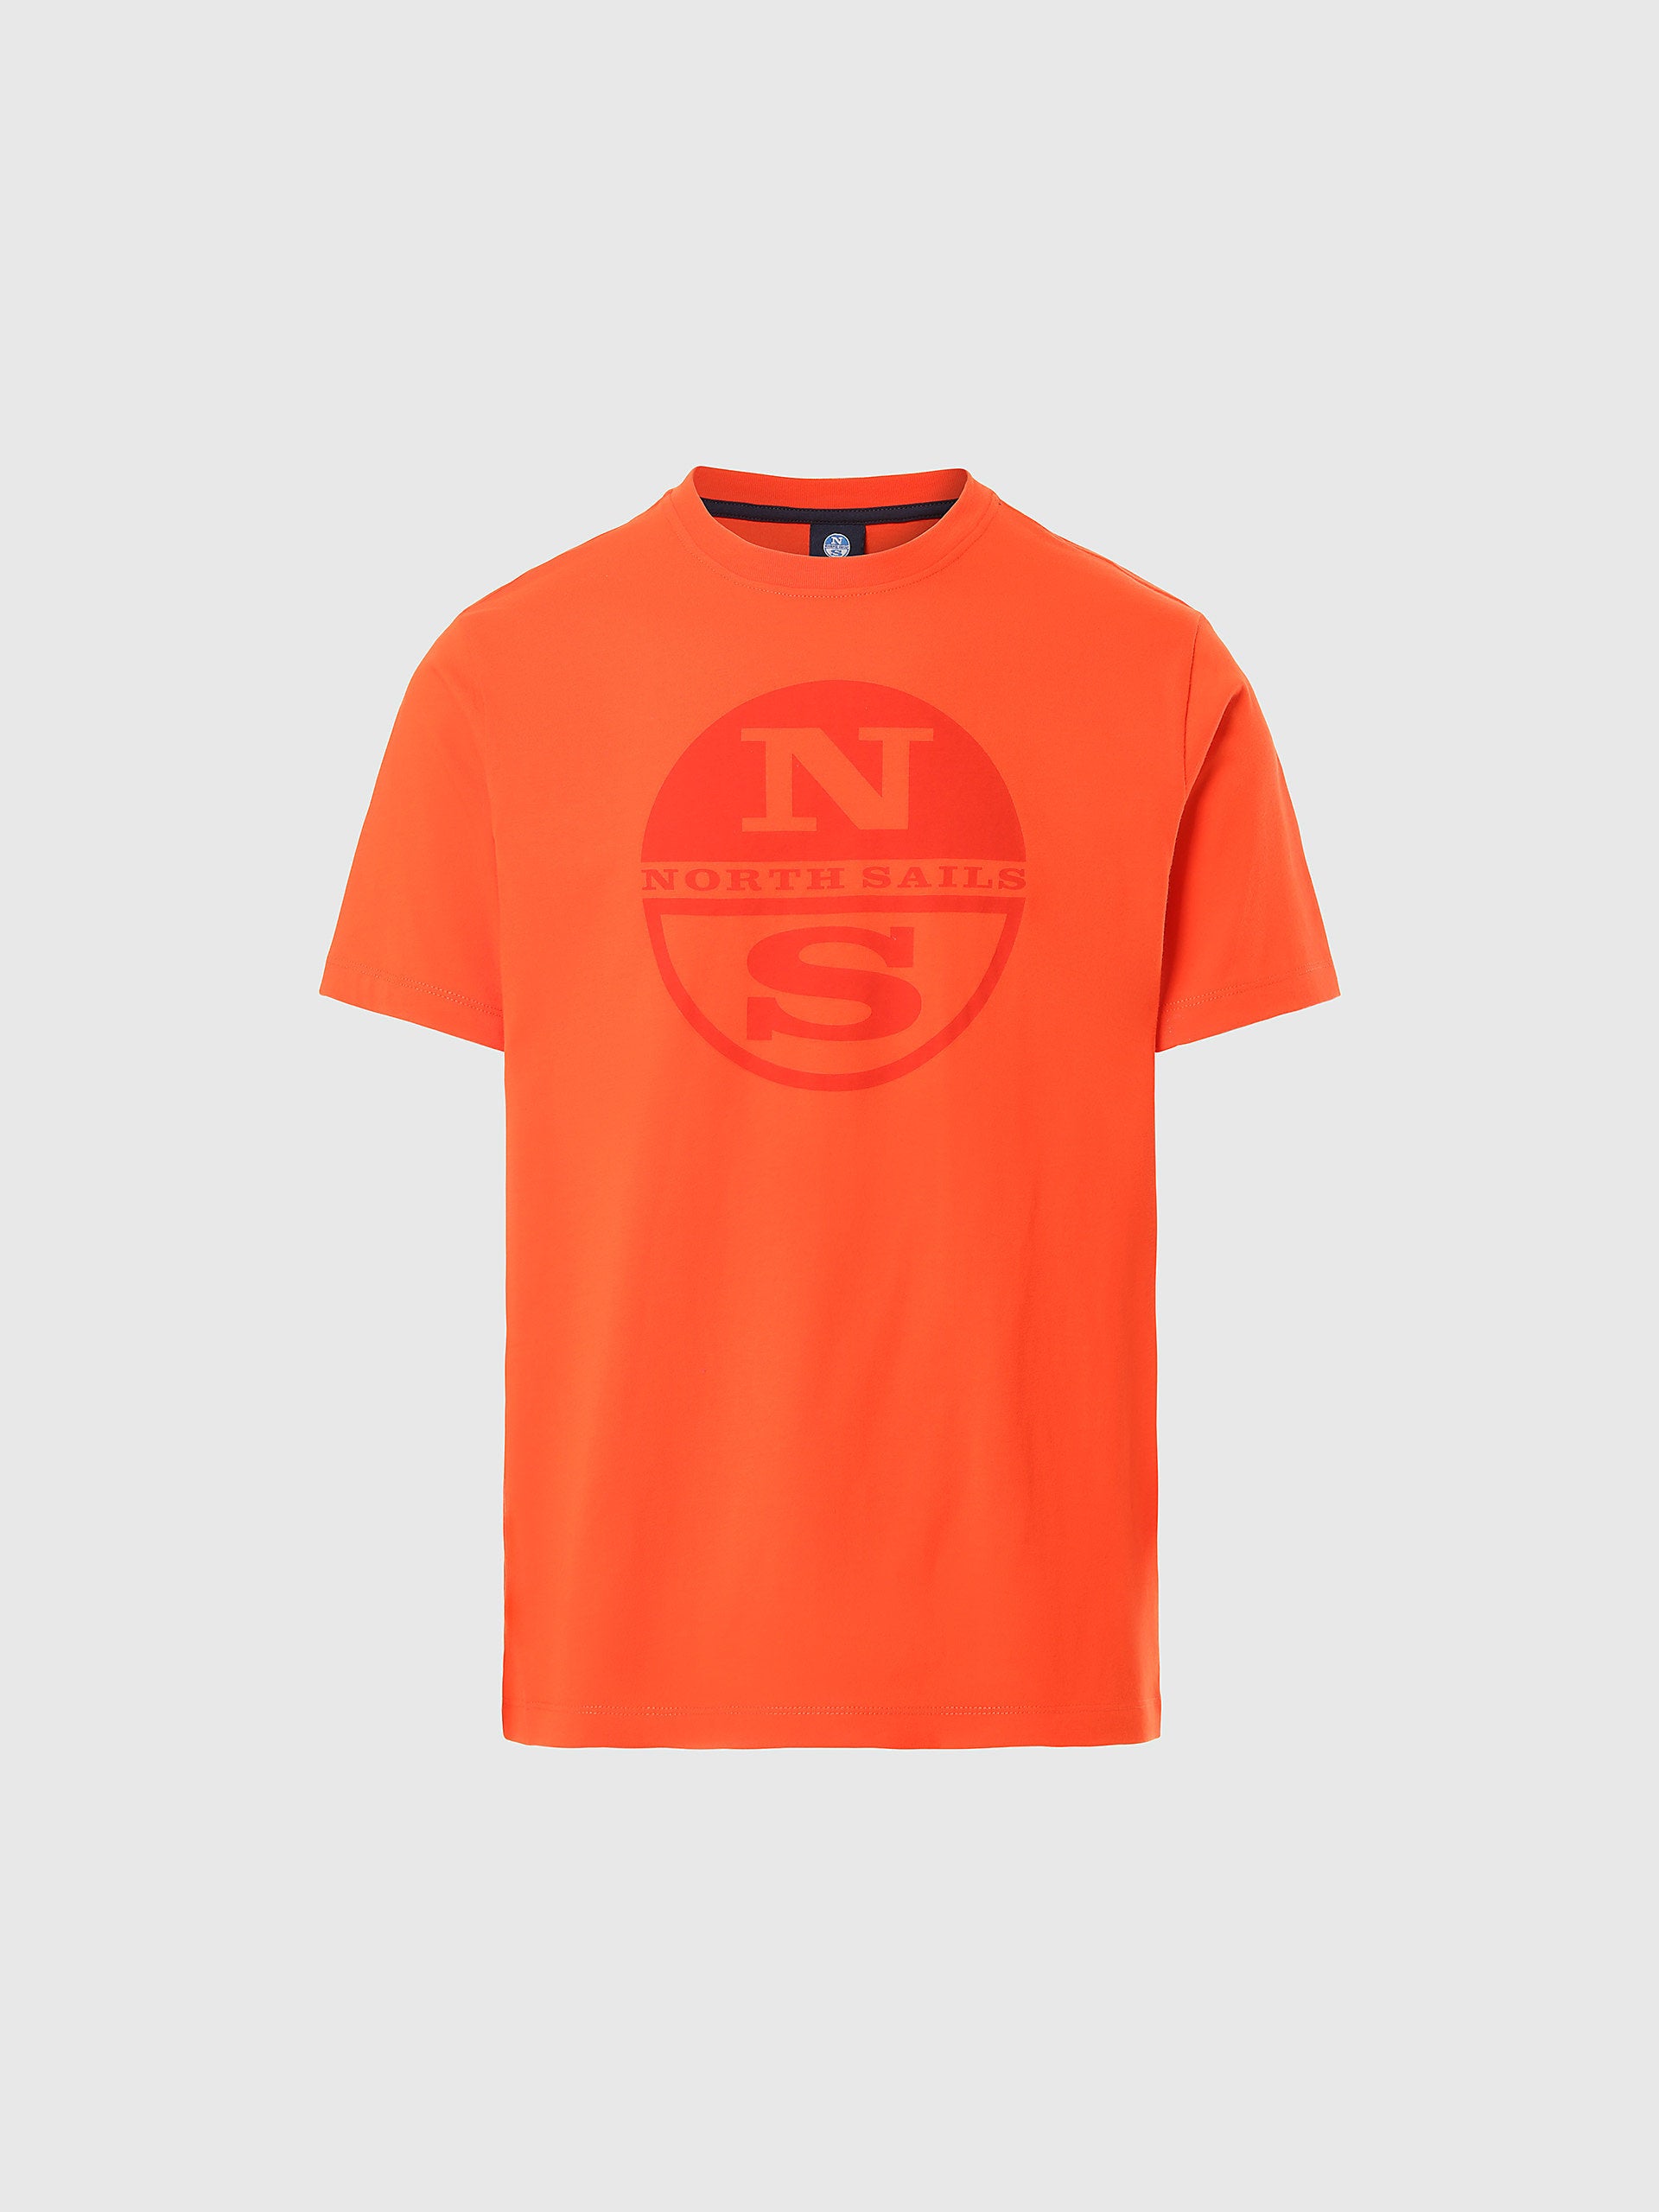 North Sails - T-shirt con stampa maxi logoNorth SailsBright orangeS